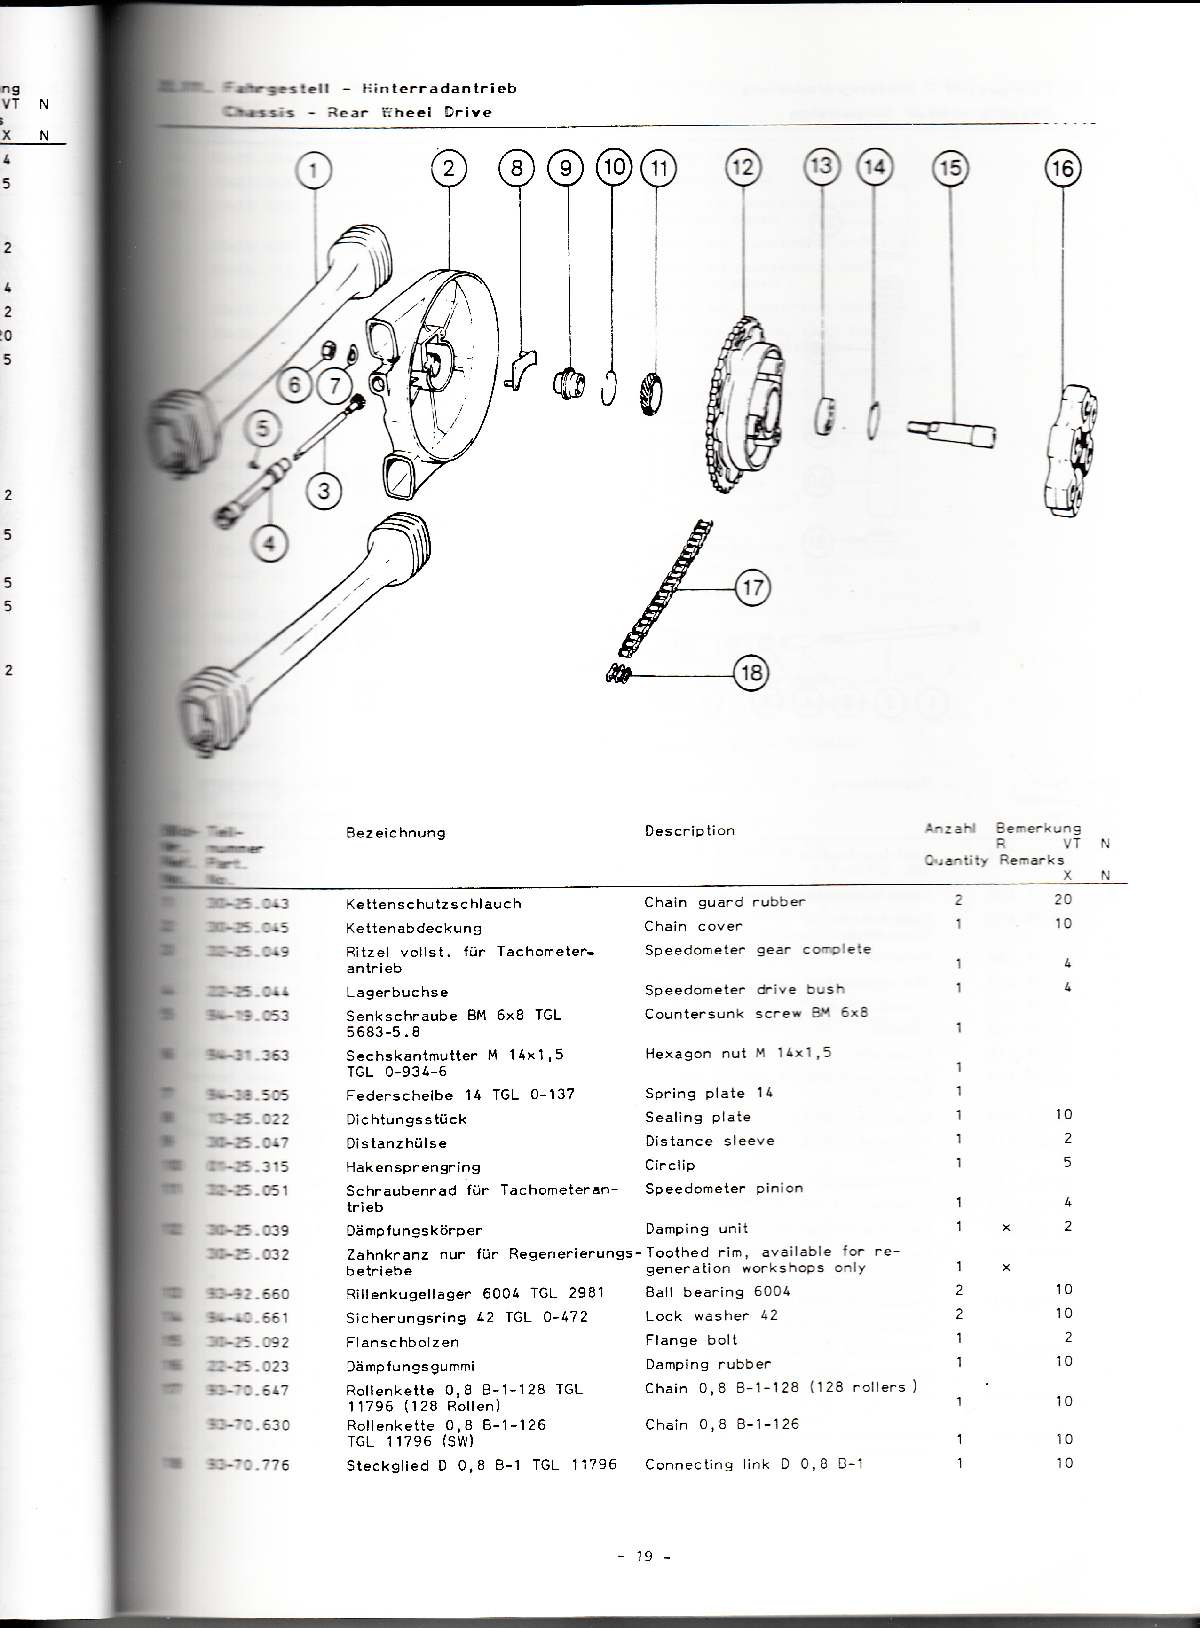 Katalog MZ 251 ETZ - 2.11. Fahrgestell - Hinterradantrieb 